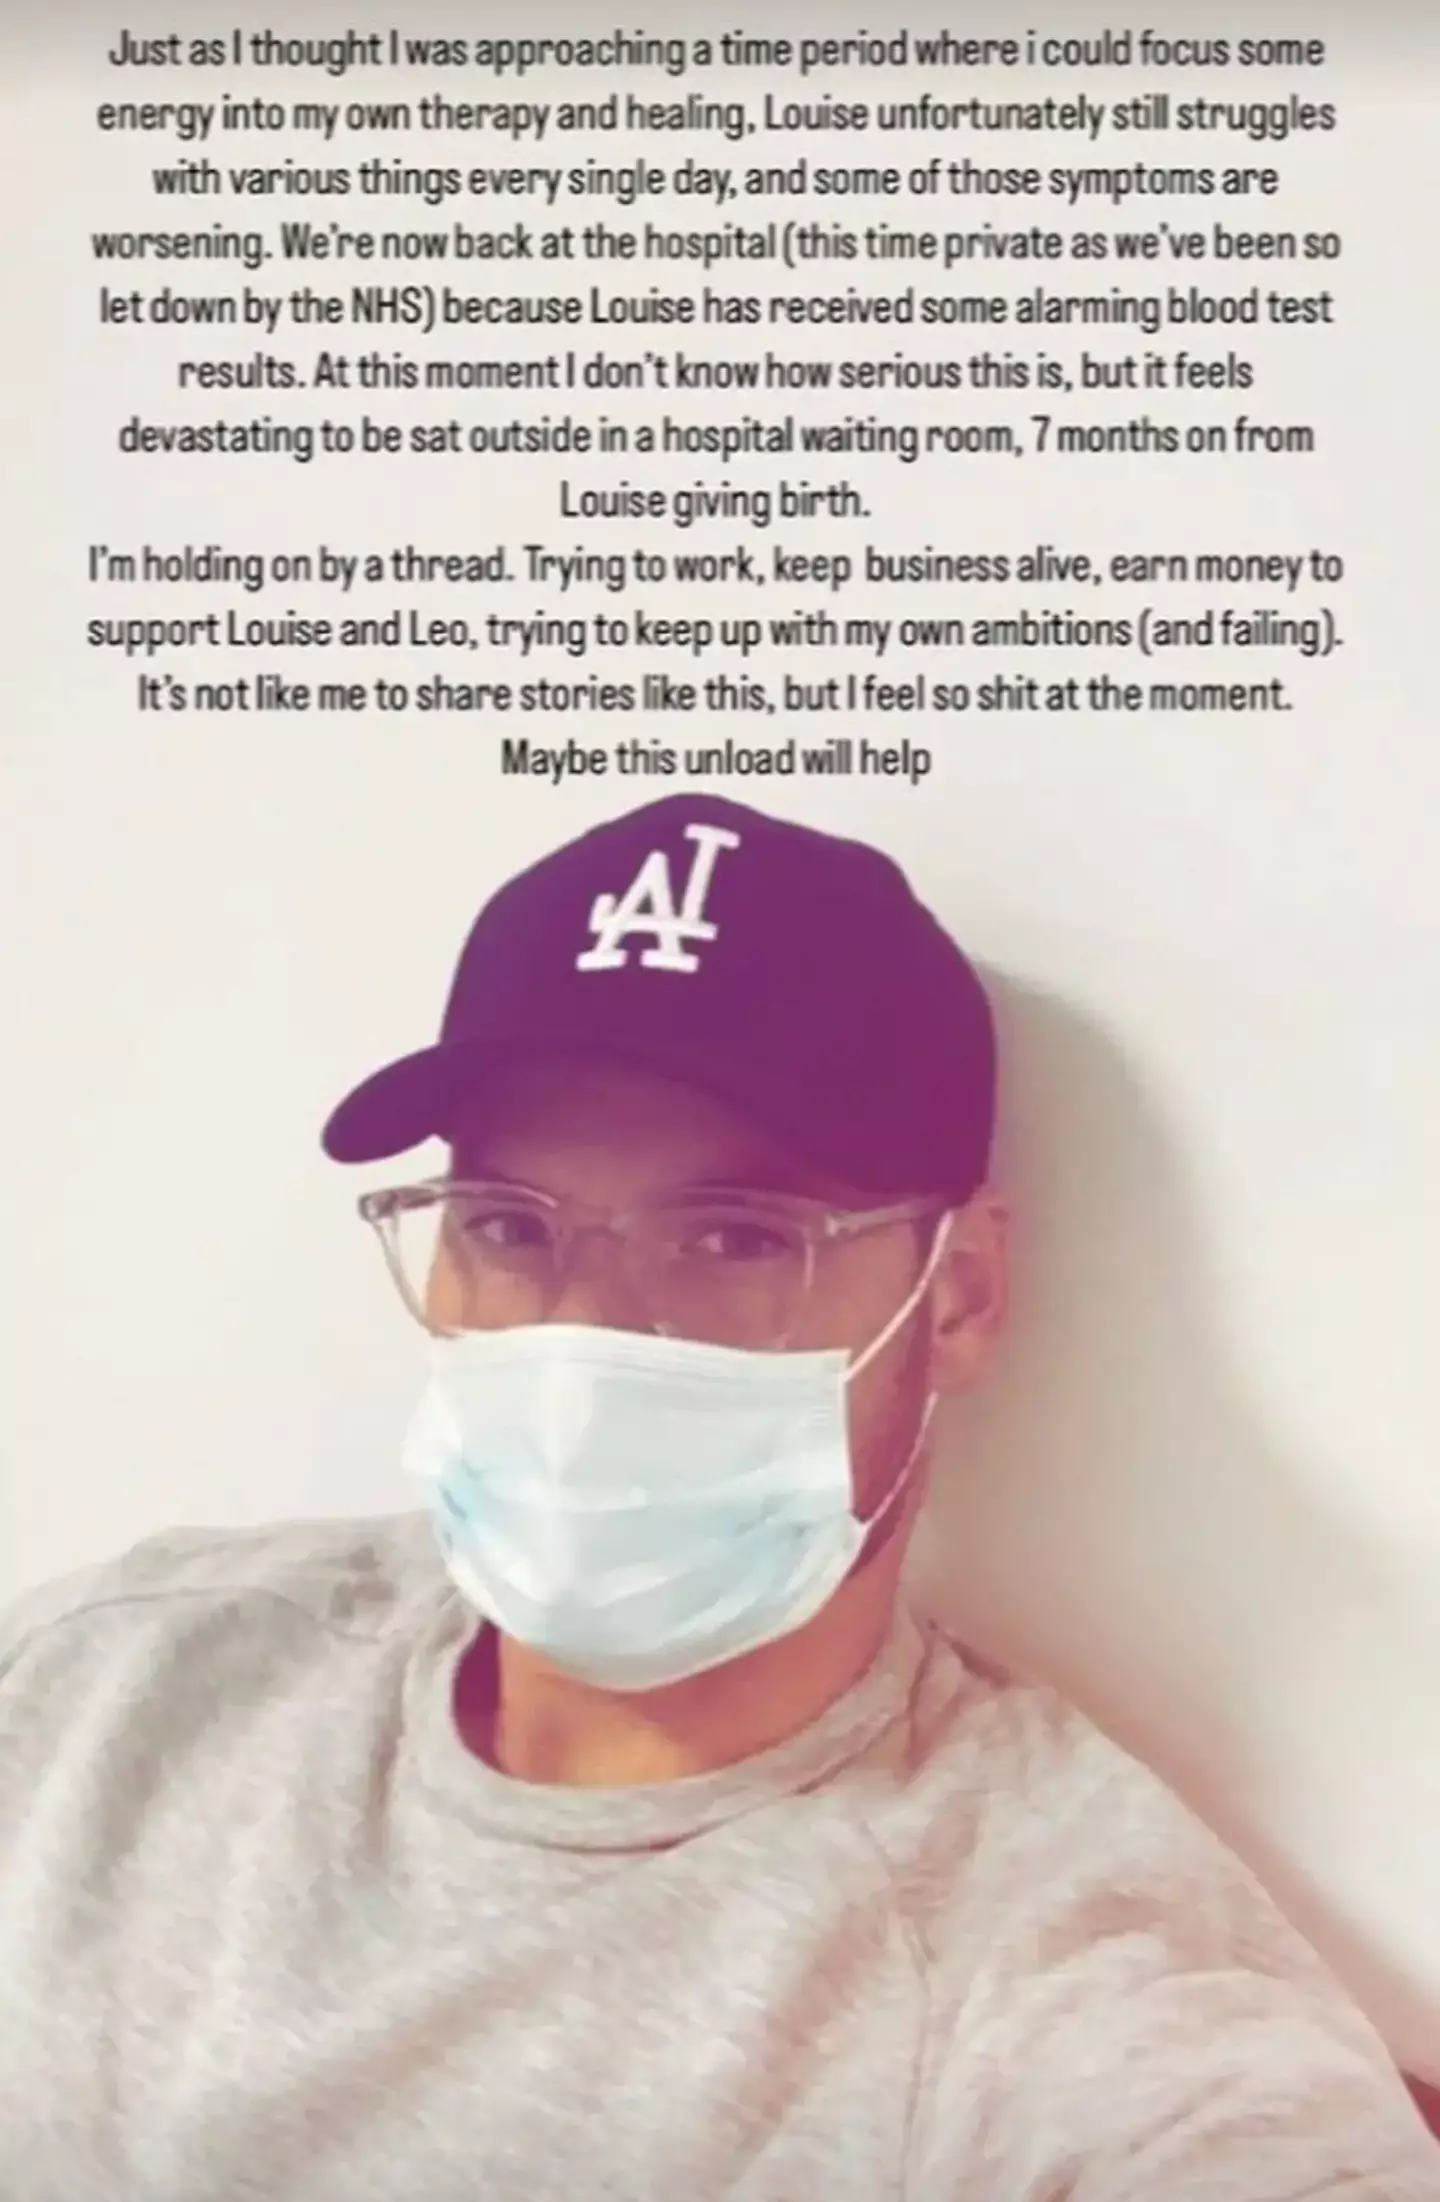 Ryan shared an update on Instagram.